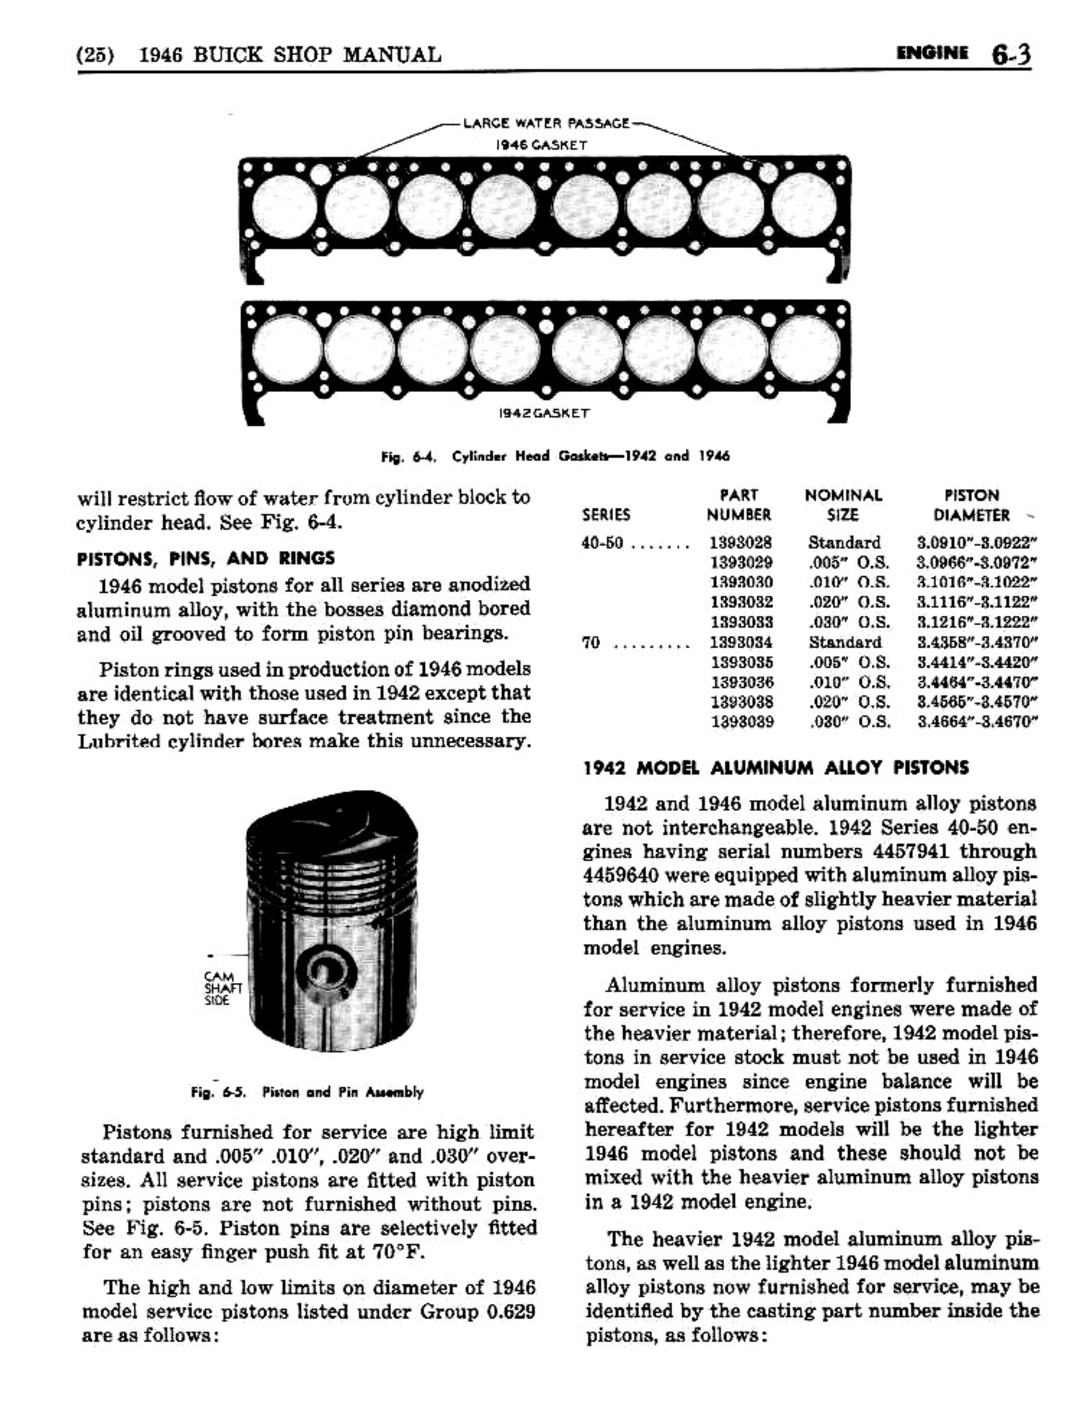 n_07 1946 Buick Shop Manual - Engine-003-003.jpg